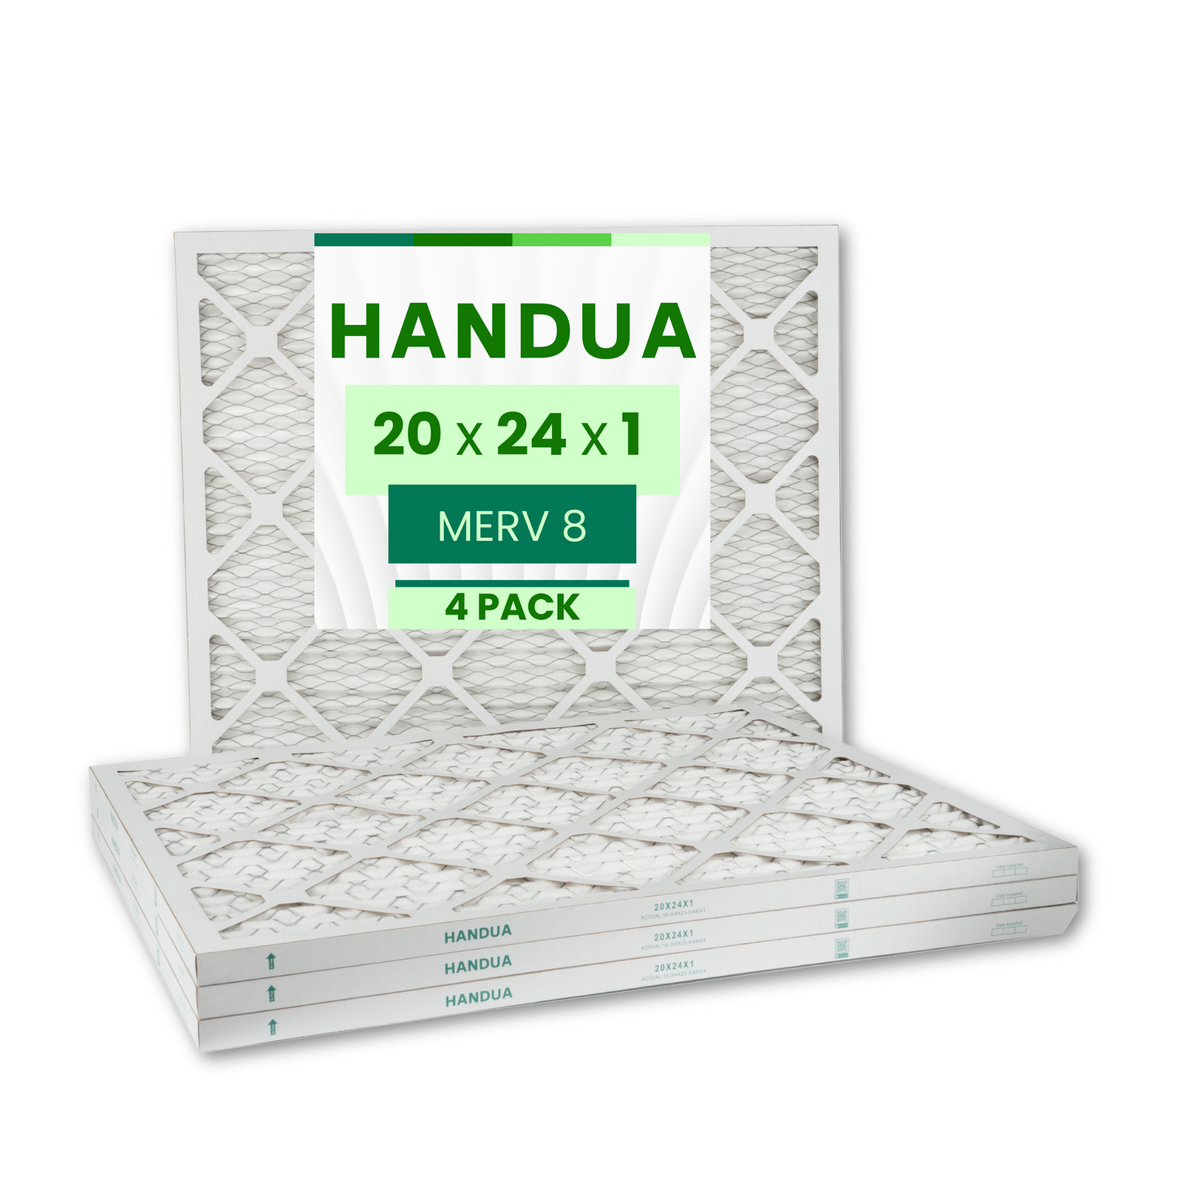 Handua 20x24x1 Air Filter MERV 8 Dust Control, Plated Furnace AC Air Replacement Filter, 4 Pack (Actual Size: 19.75" x 23.75" x 0.75")